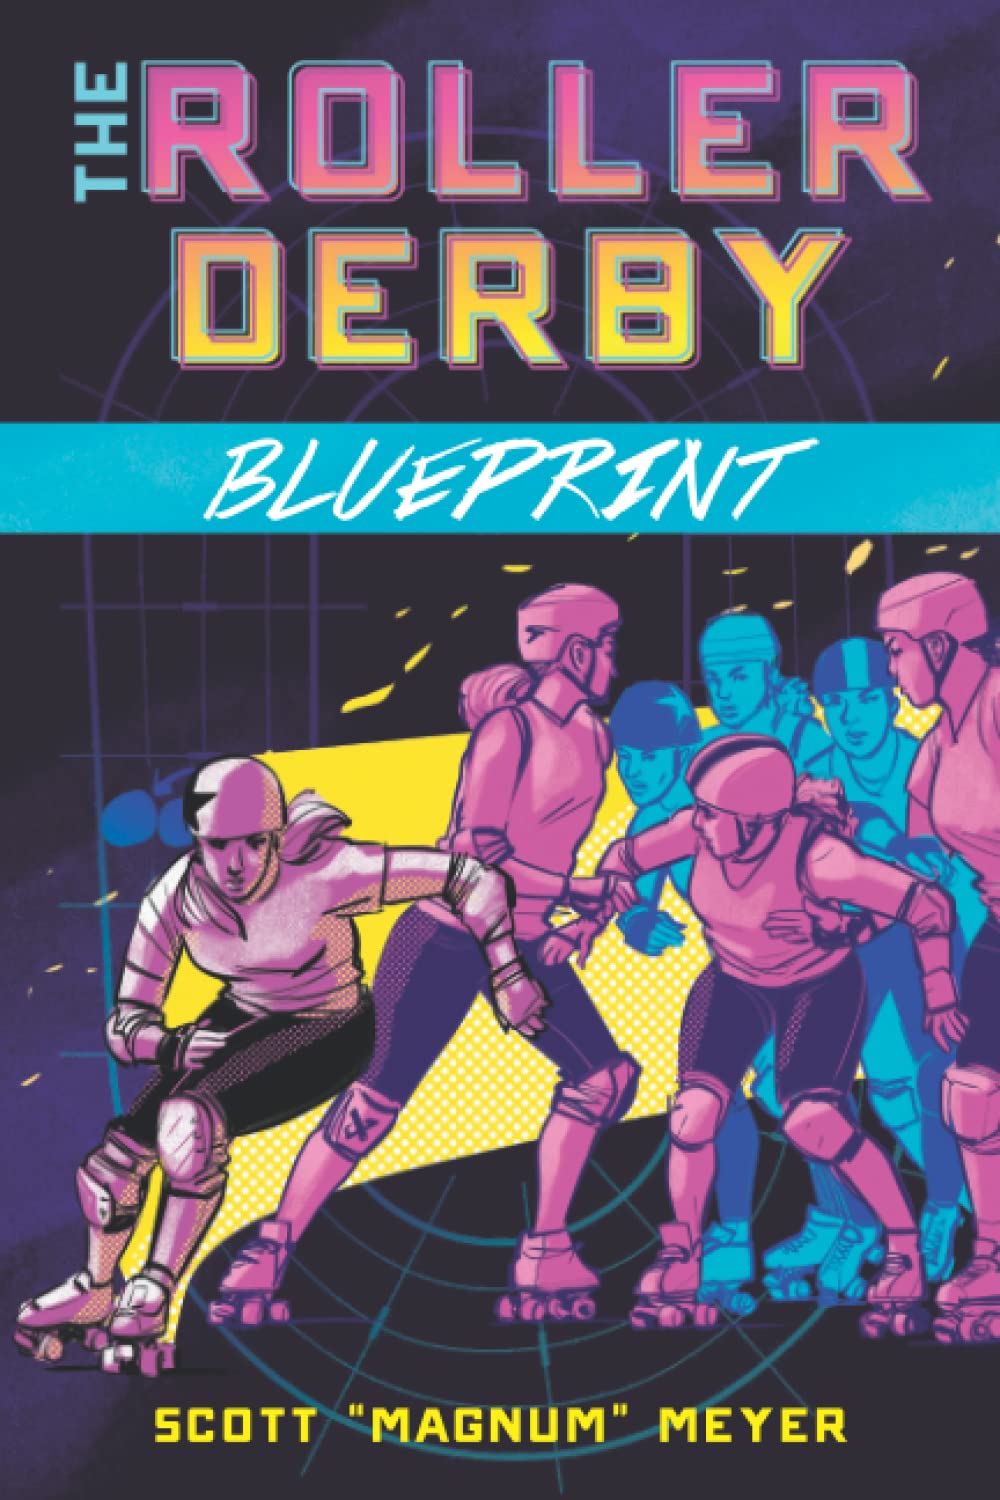 The Roller Derby Blueprint